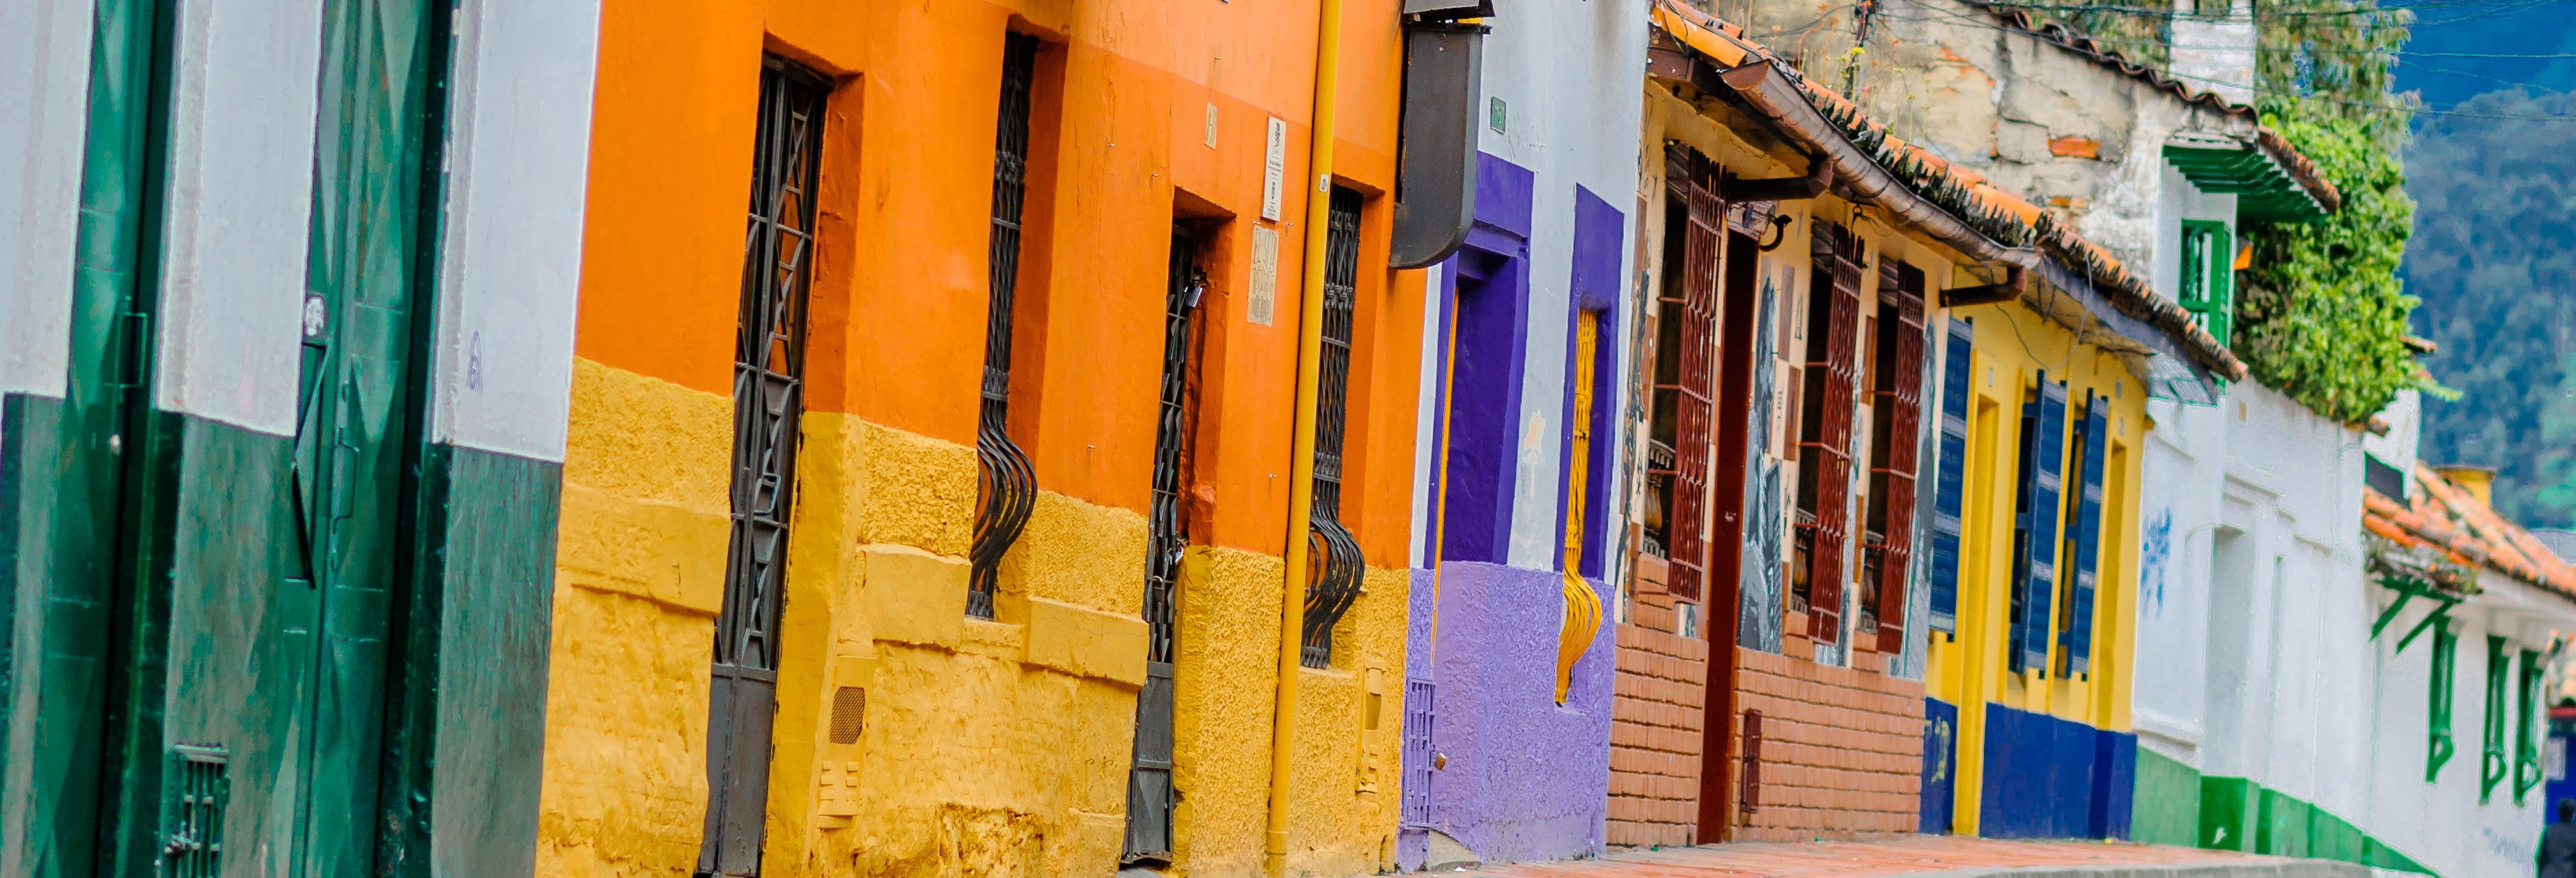 Free tour de contrastes de Bogotá